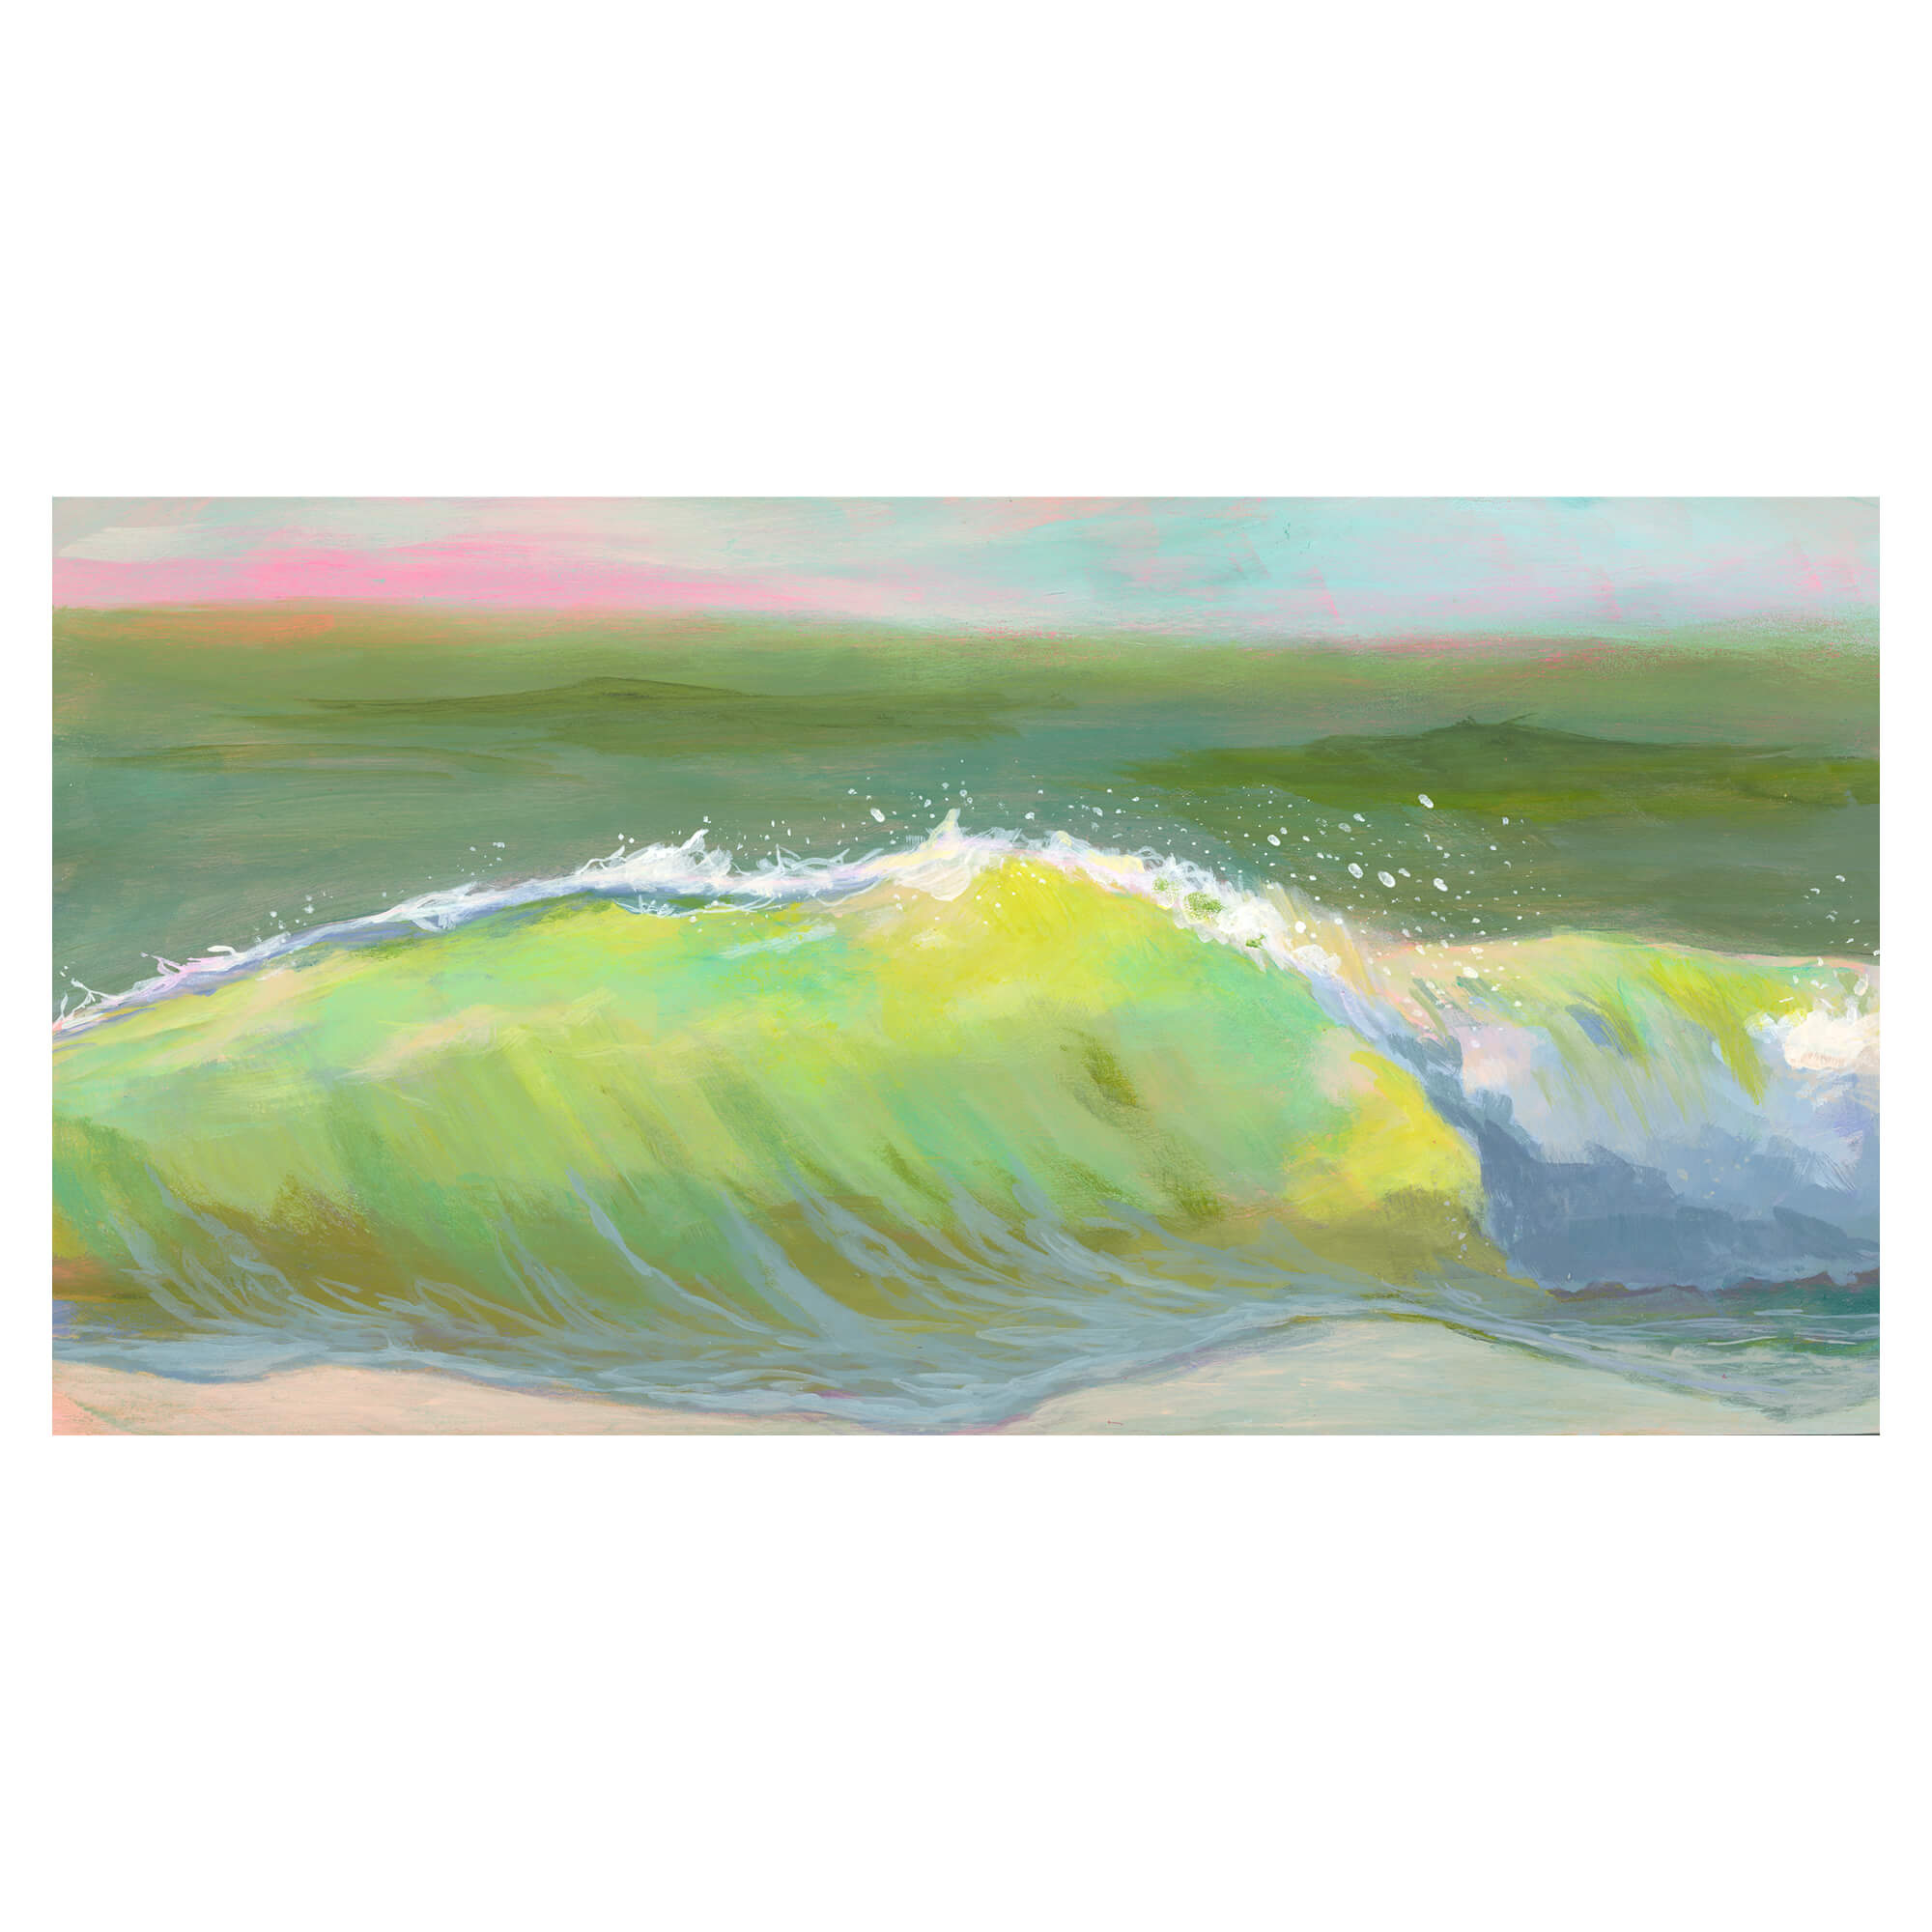 A panoramic green-hued barrel wave by Hawaii artist Lindsay Wilkins